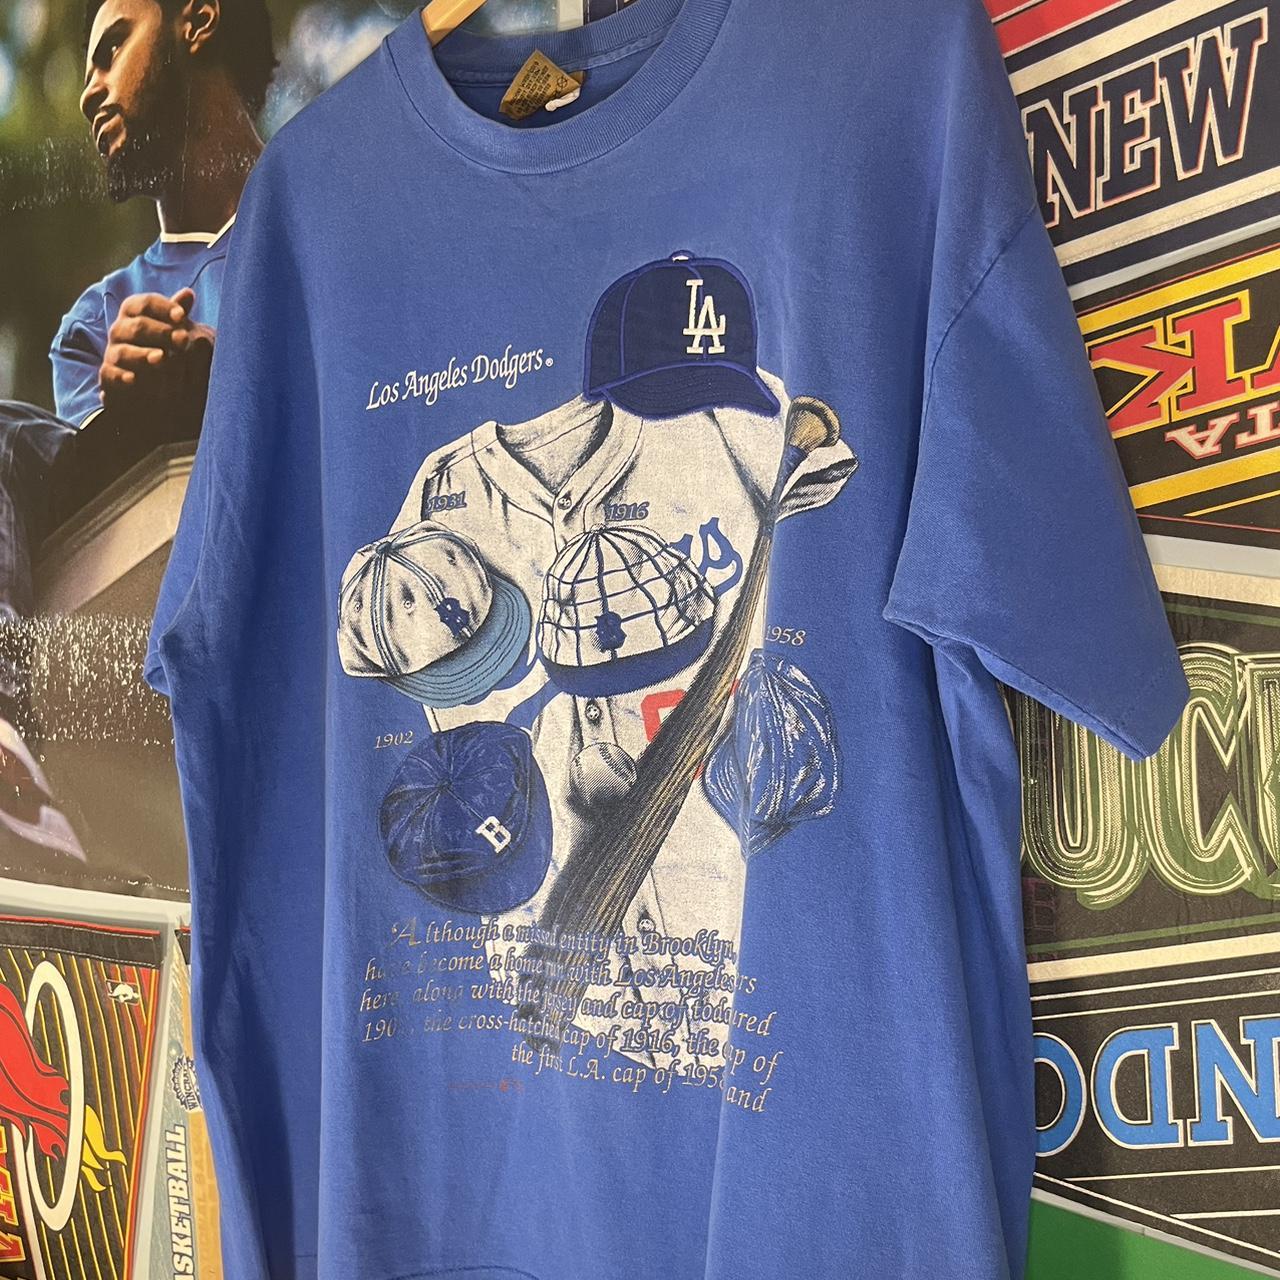 Vintage Los Angeles Dodgers Jersey Shirt